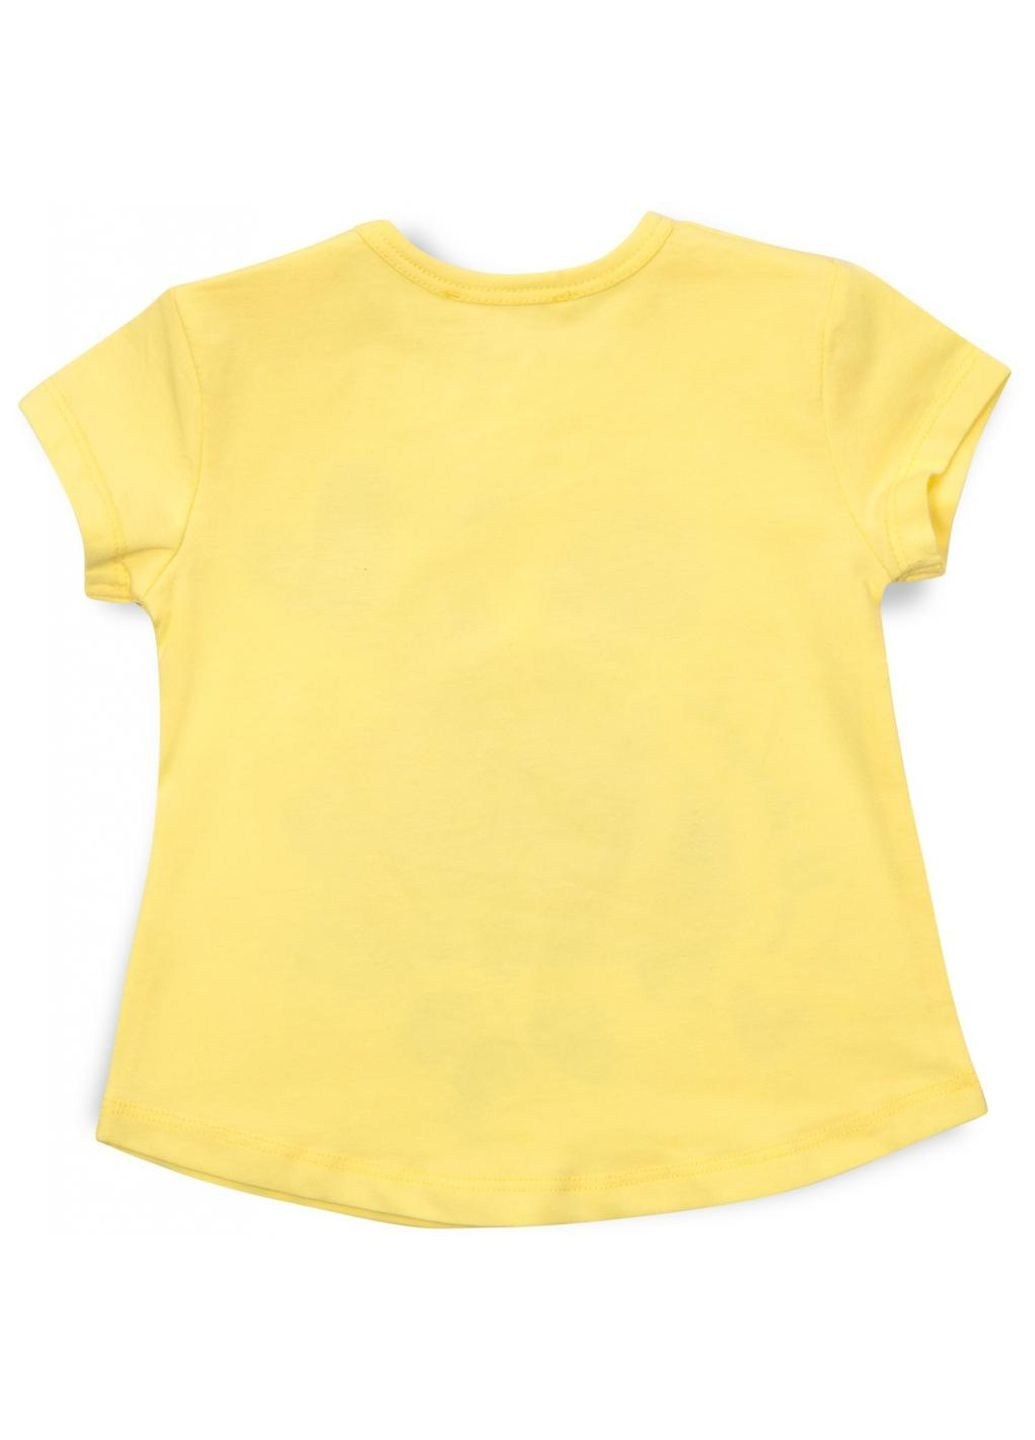 Жовта літня футболка дитяча "best friends" (14114-104g-yellow) Breeze